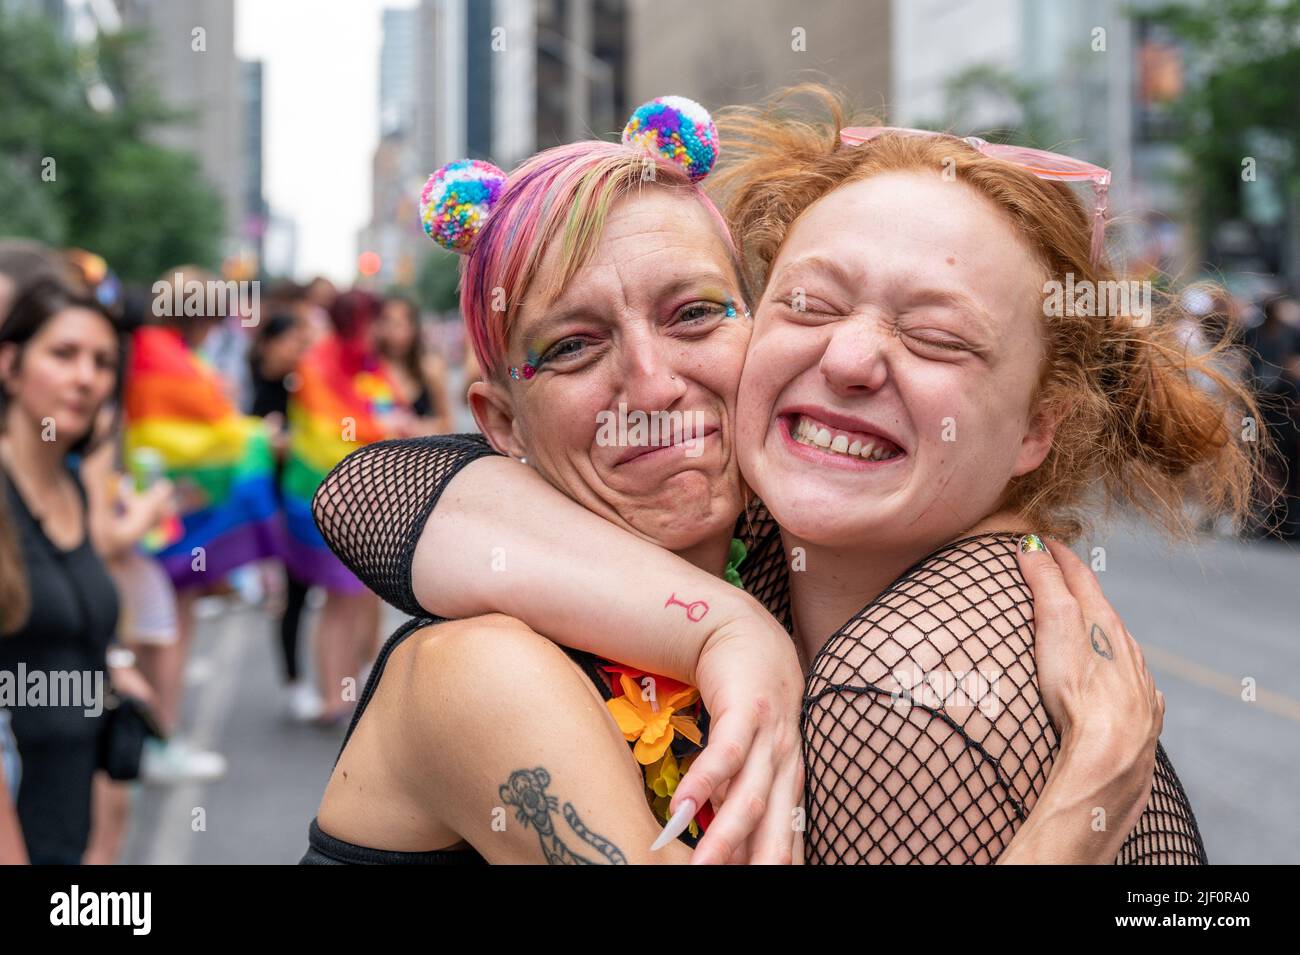 Emotional hug between two female people during the Pride Parade in Bloor Street. Stock Photo